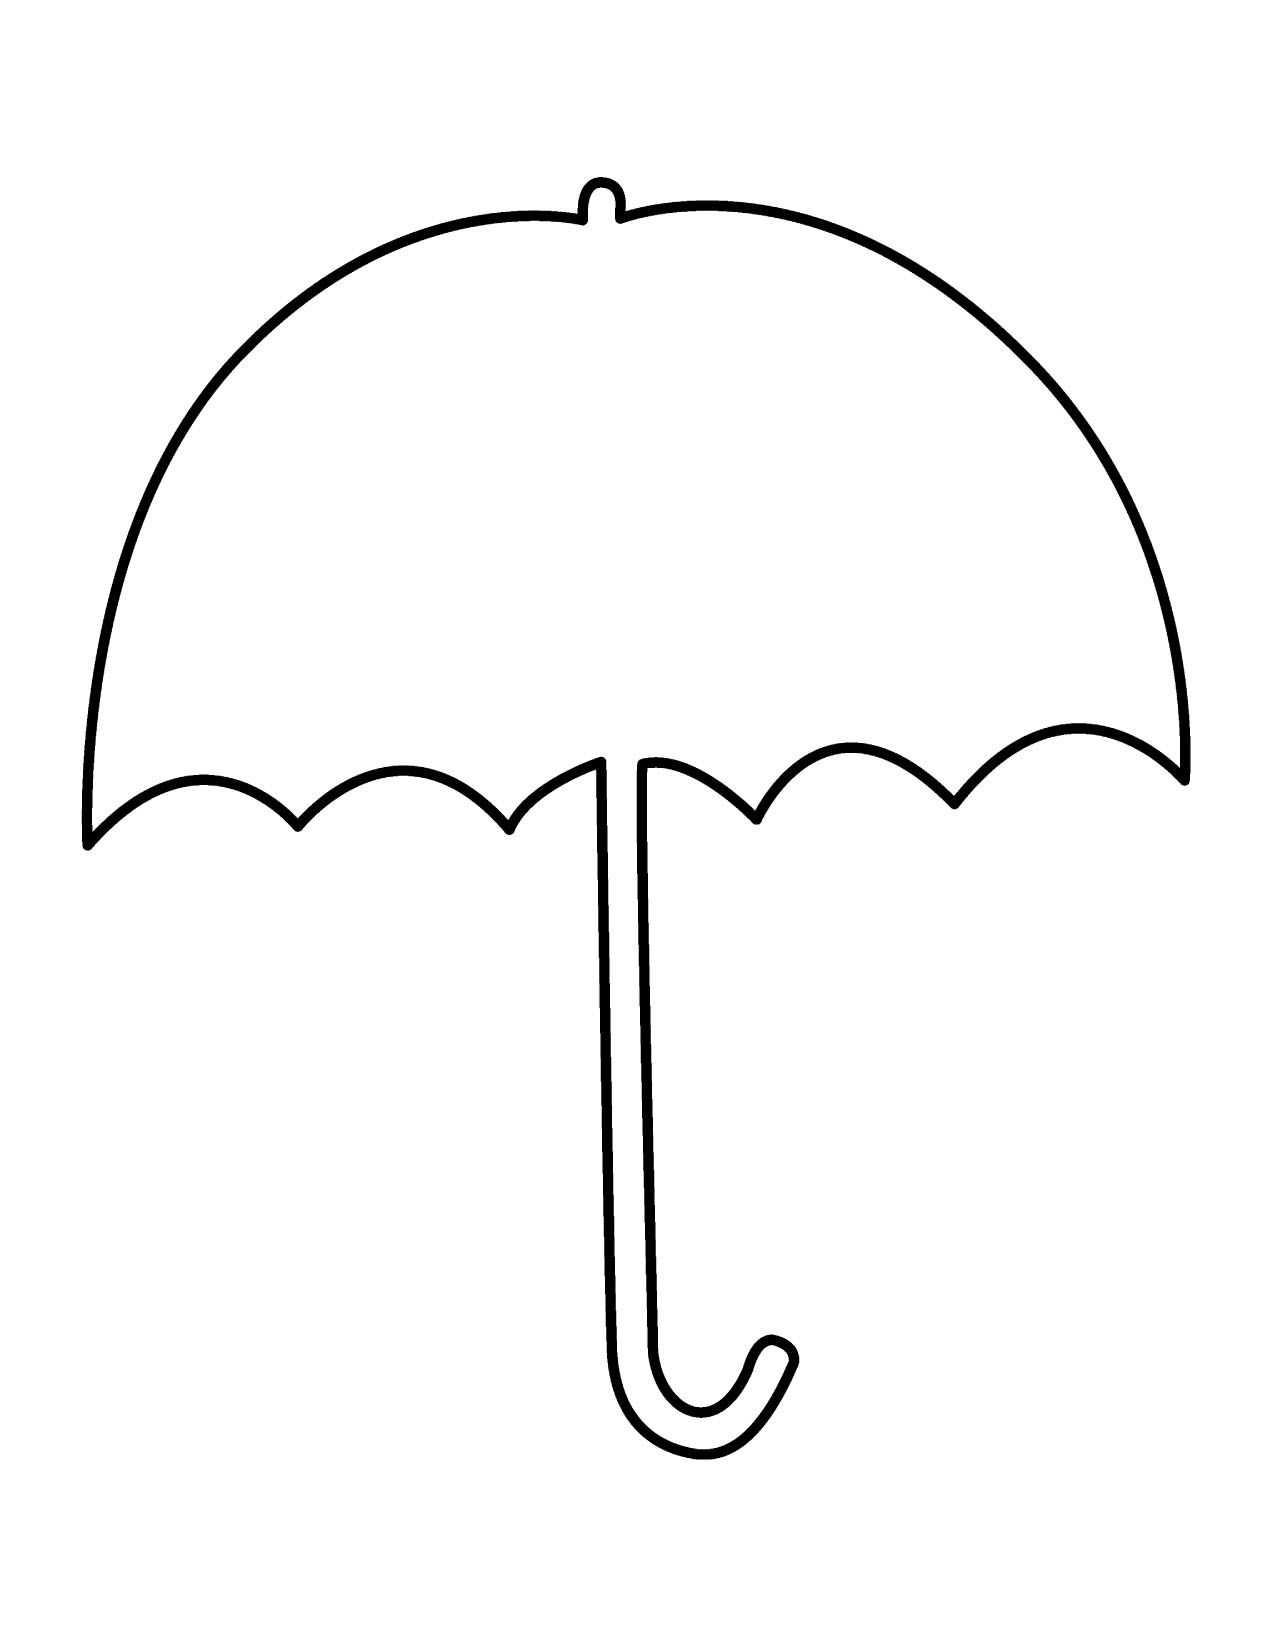 Umbrella Clip Art Outline Clipart Panda Free Clipart Images Regarding Blank Umbrella Template